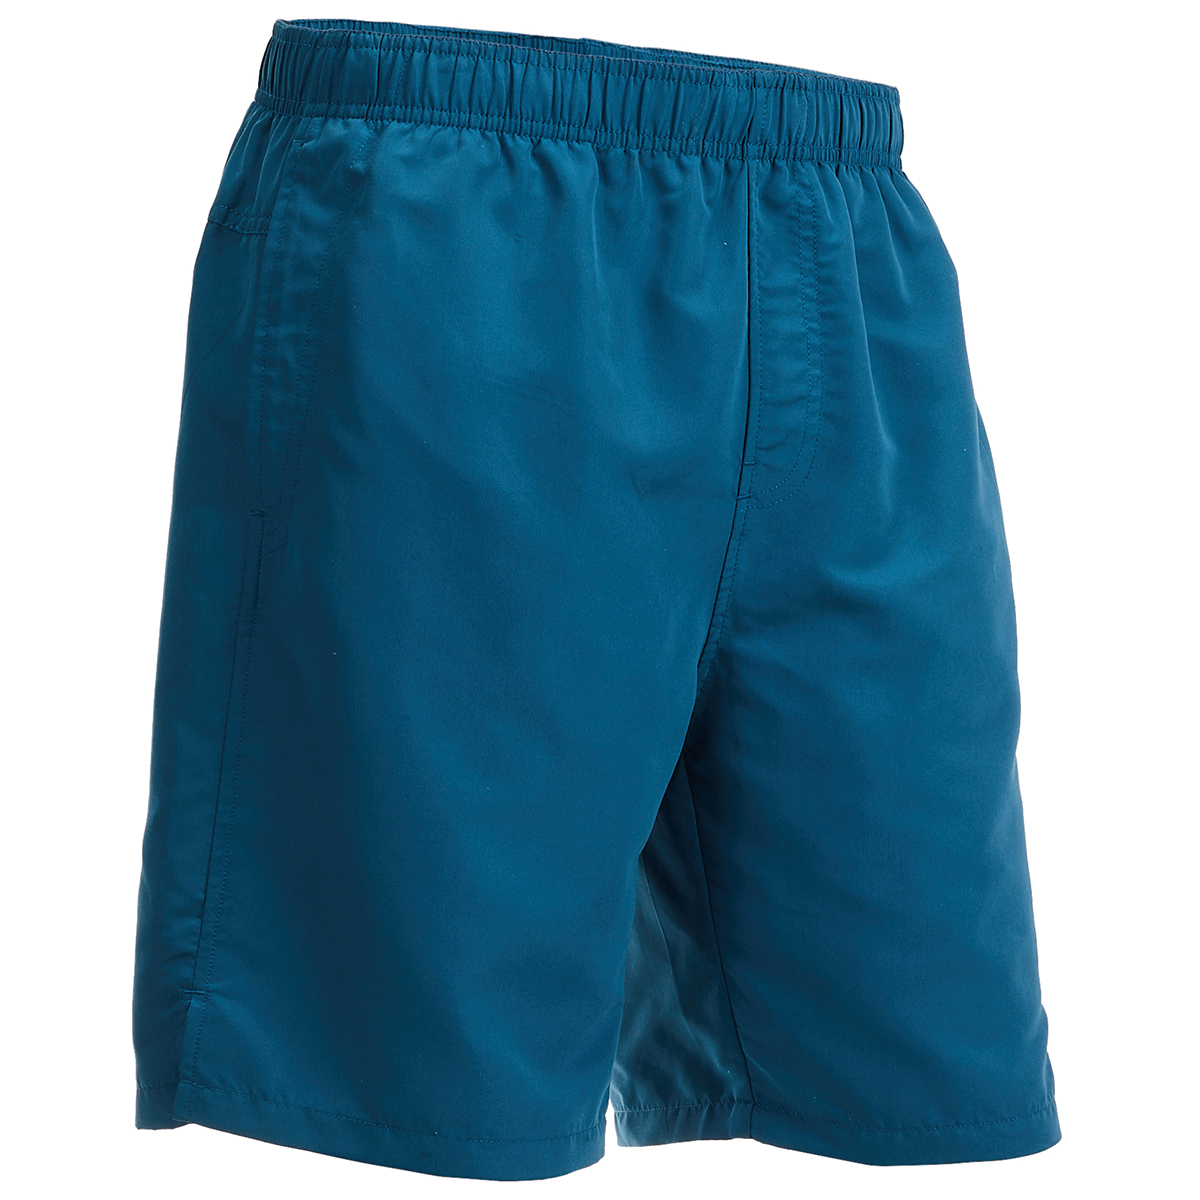 Ems Men's Fin Water Shorts - Blue, S